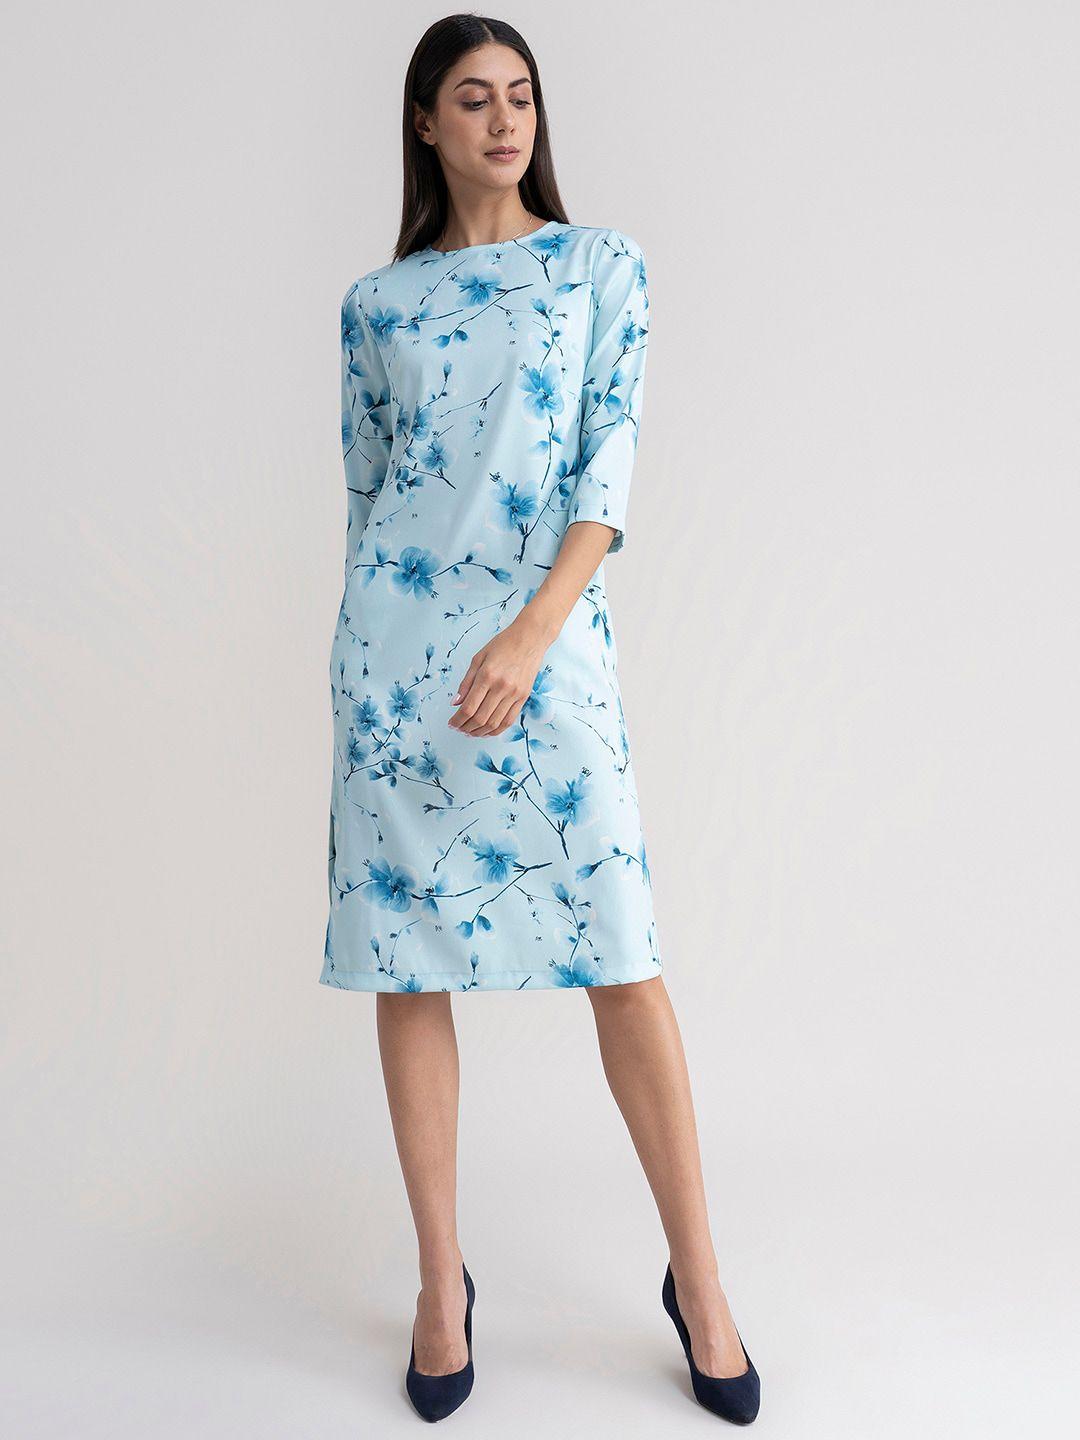 fablestreet women blue floral printed formal sheath dress